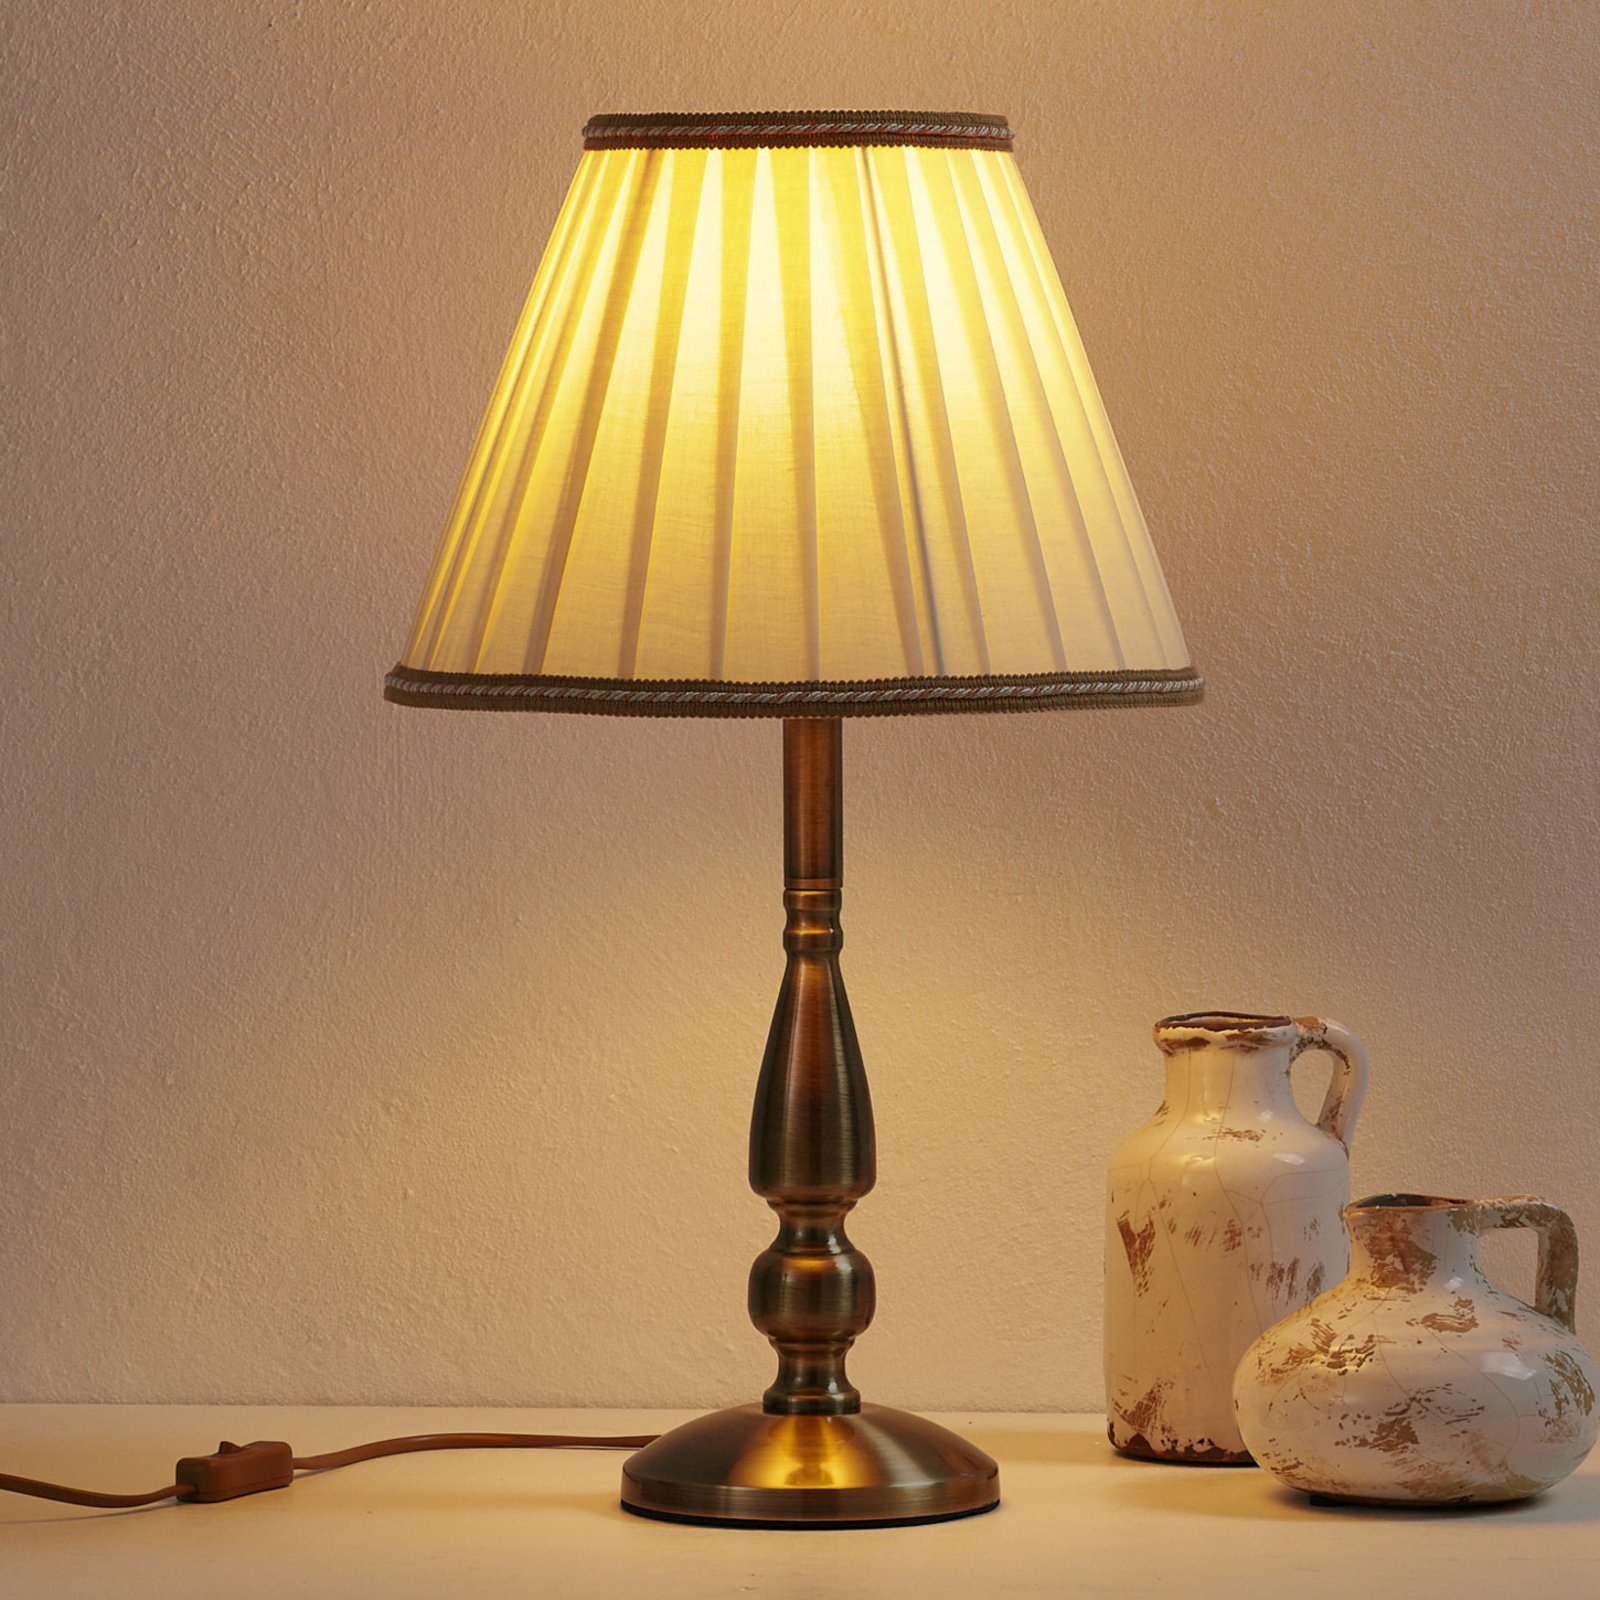 Rosella table lamp 50 cm high